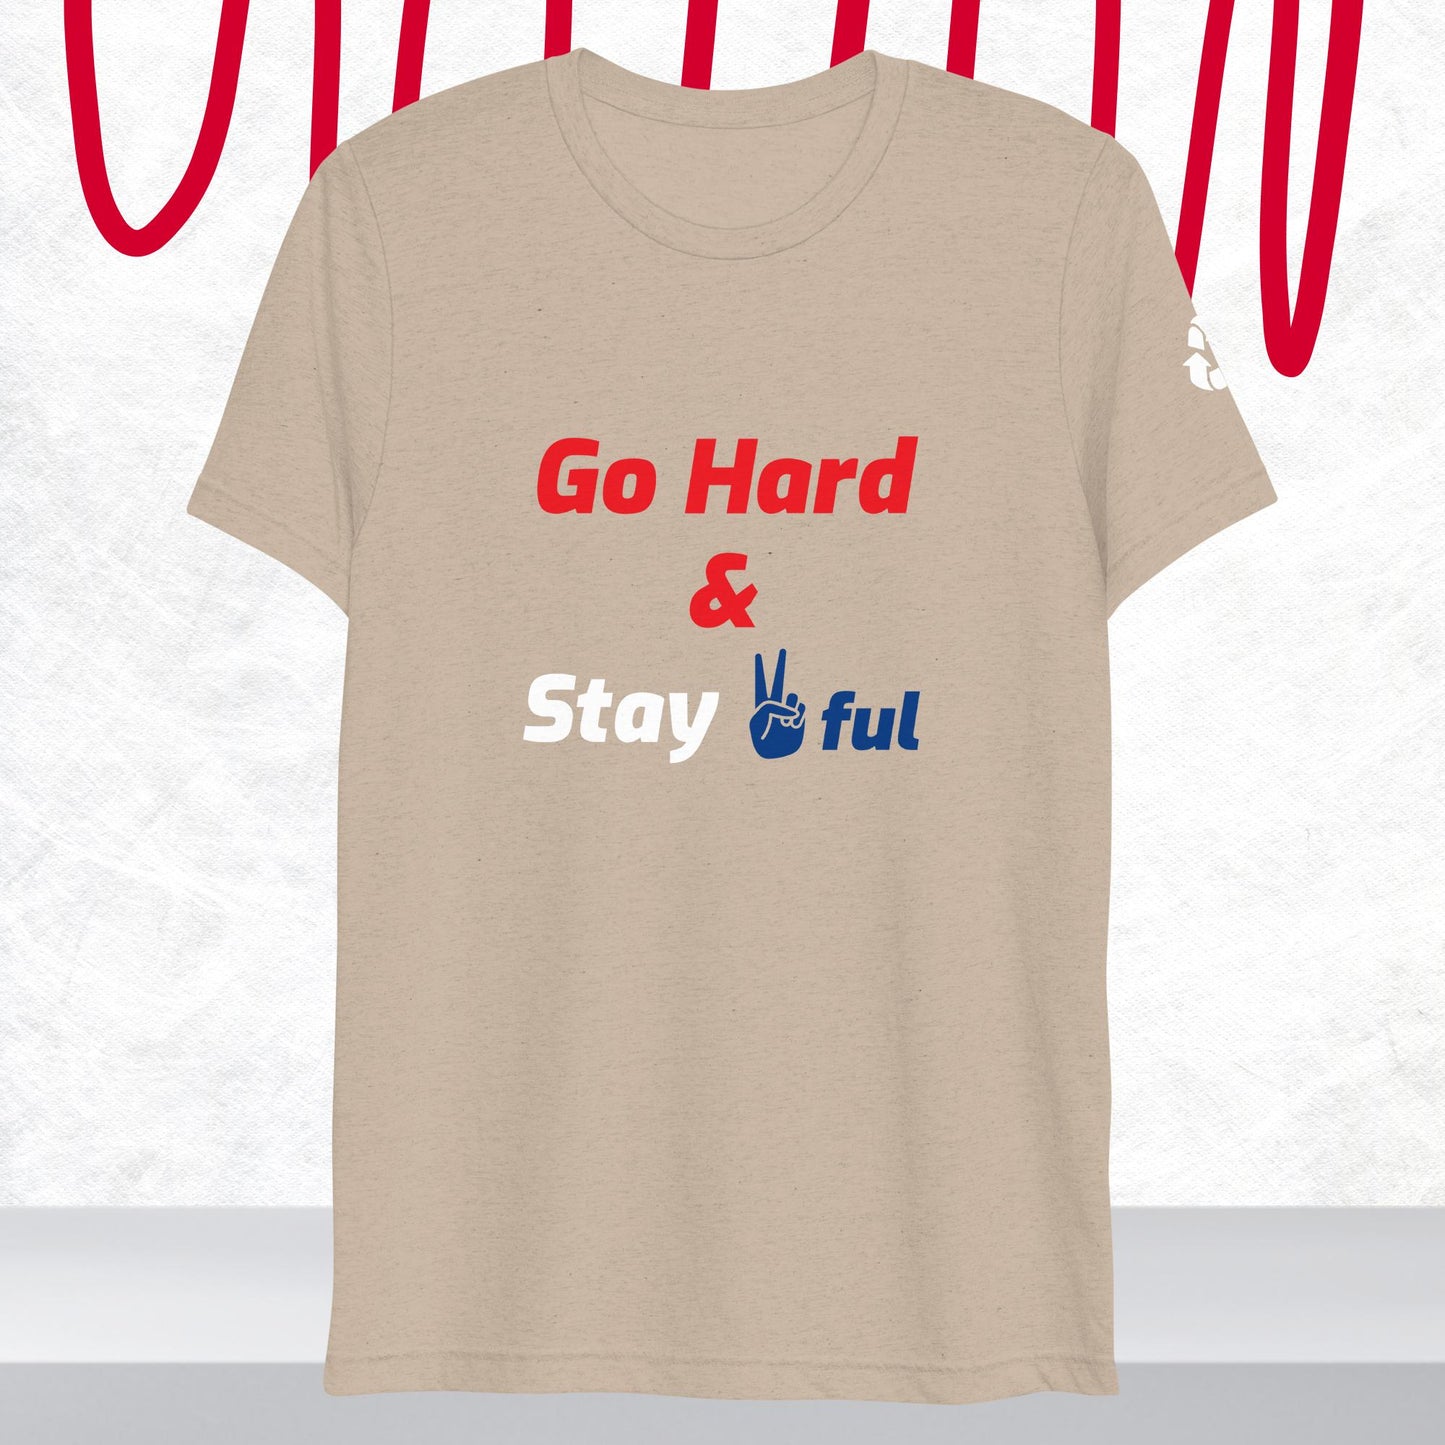 Go Hard Stay ✌️ful Shirt